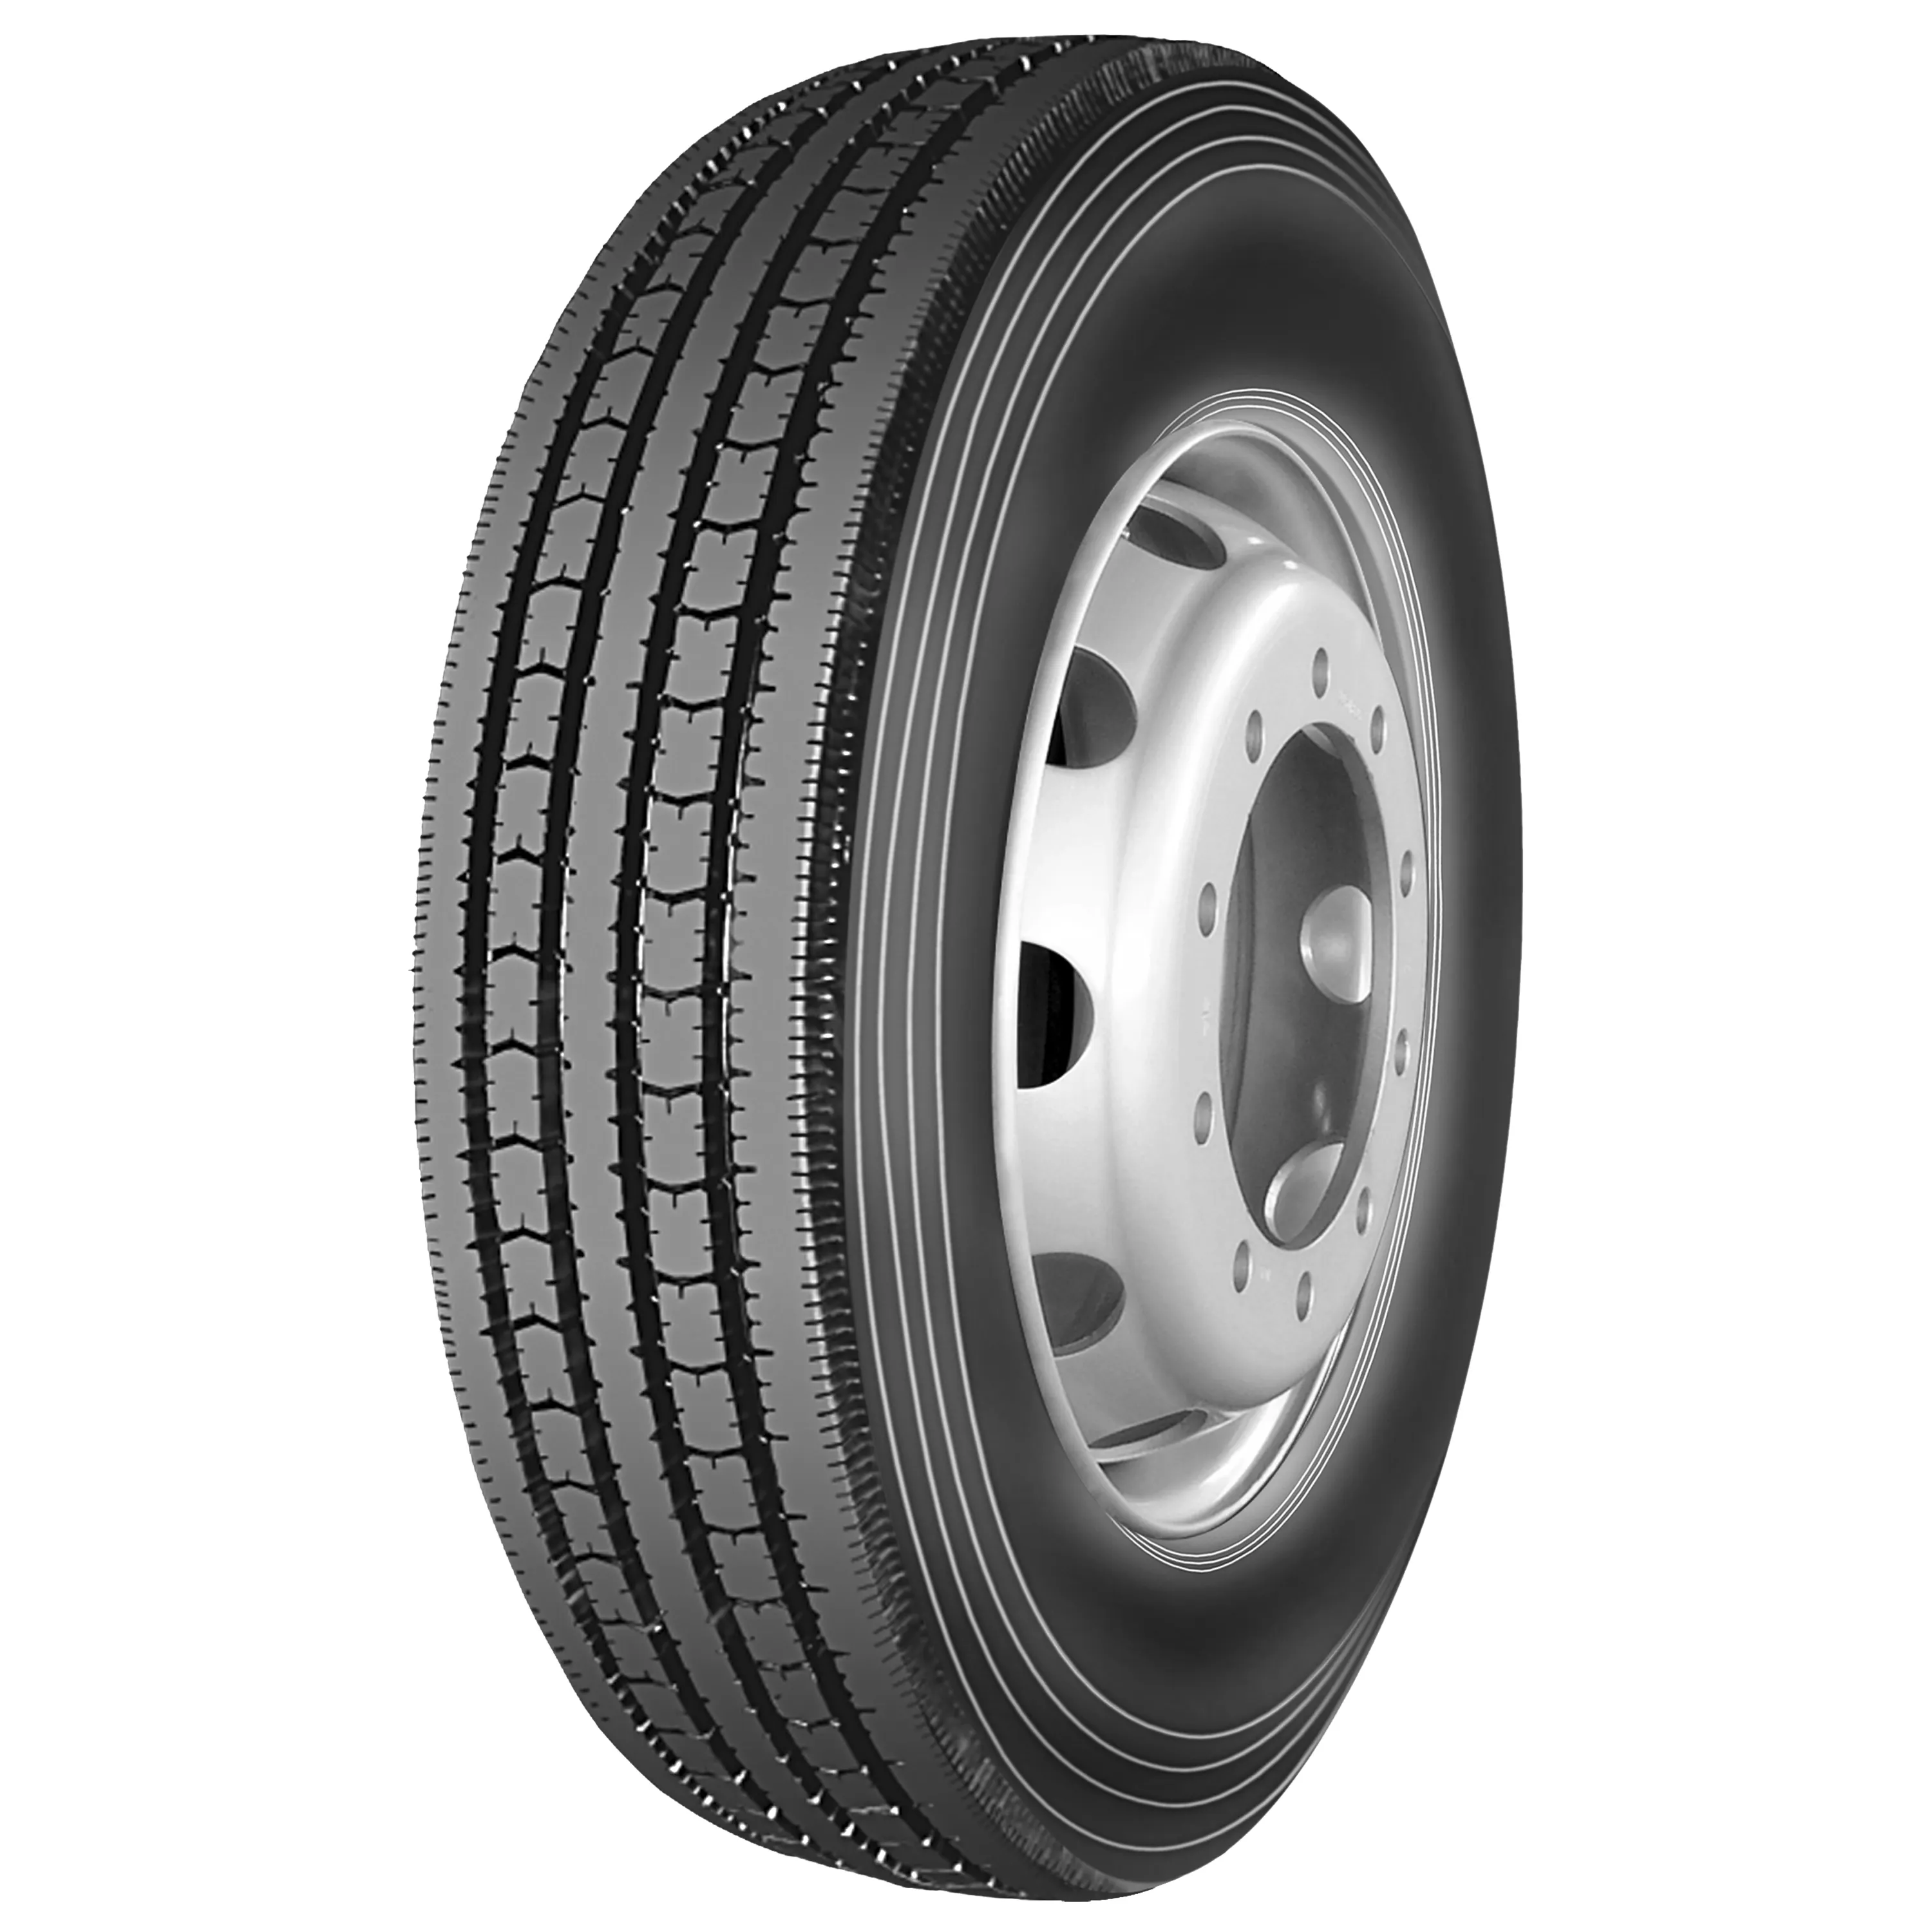 Roadlux brand semi truck tire 295/75r22.5 llantas 11r22.5 11r24.5 for commercial vehicle wheel